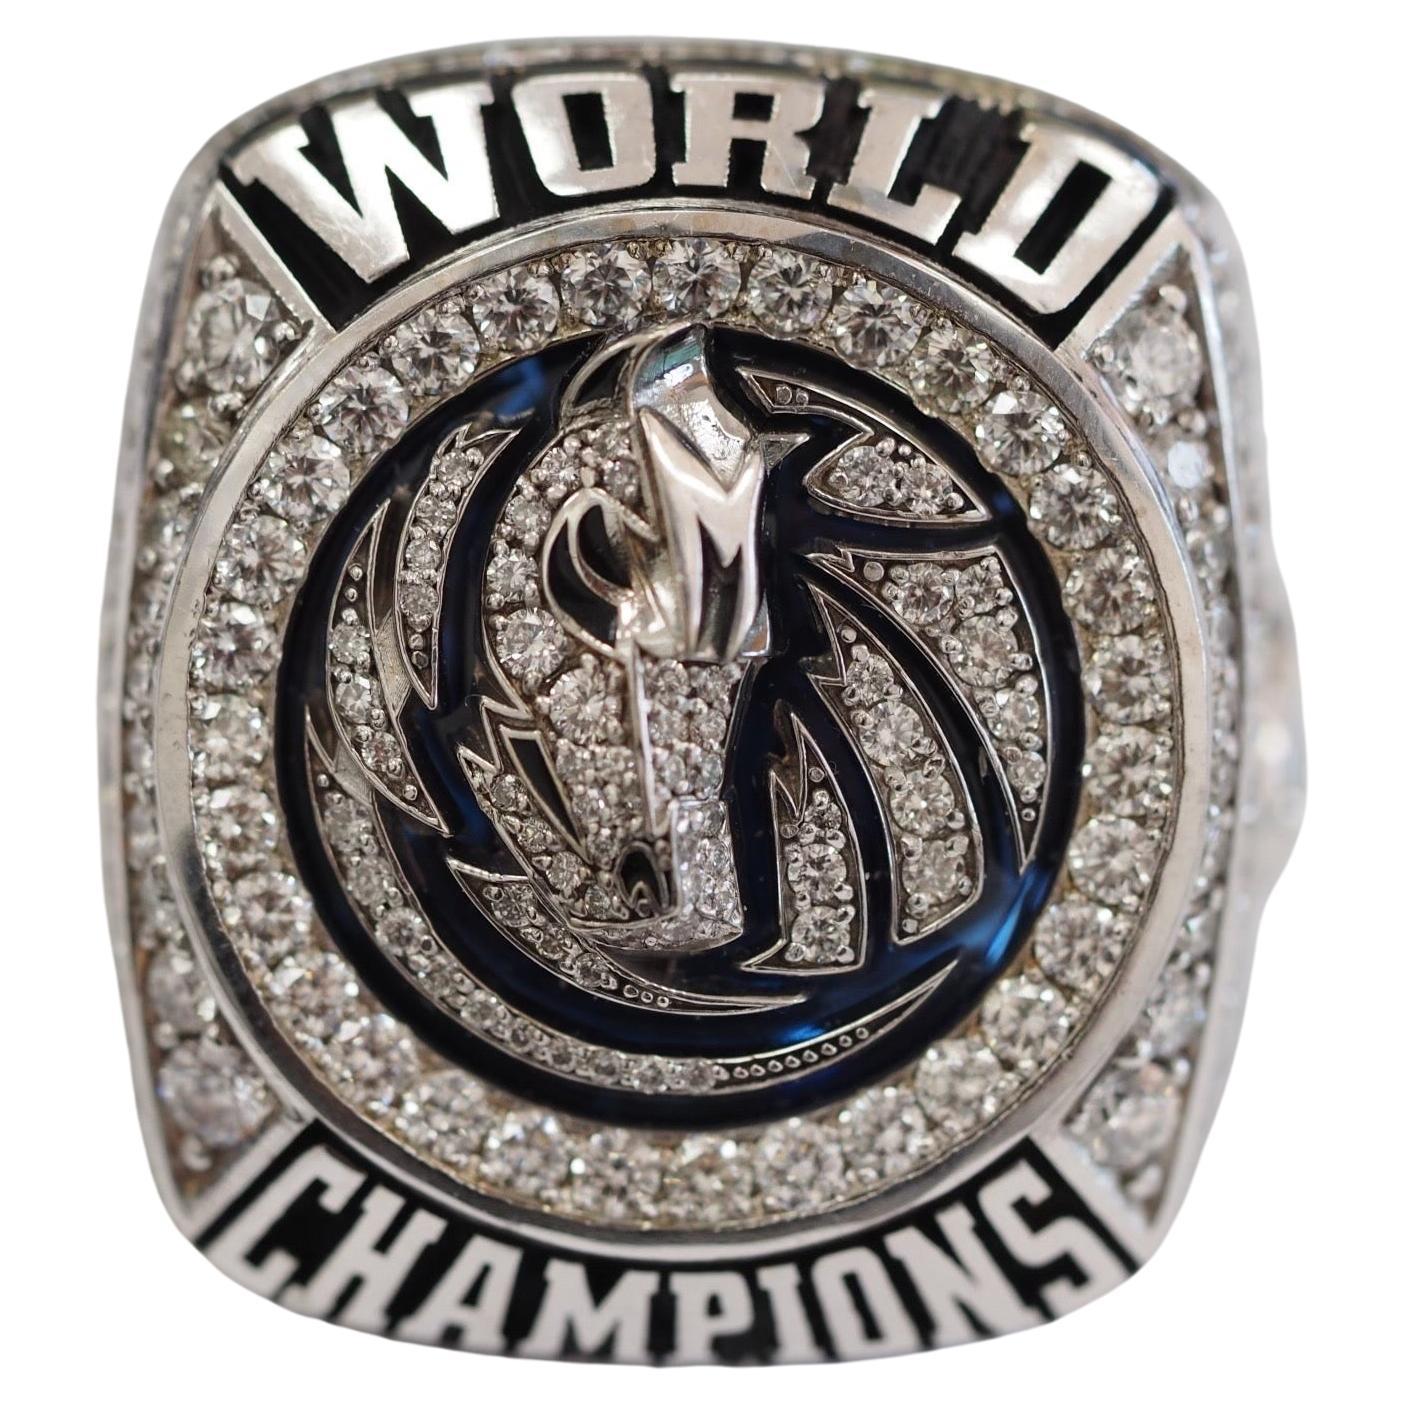 Jason Terry 2011 Dallas Mavericks NBA Championship Ring 14K Gold